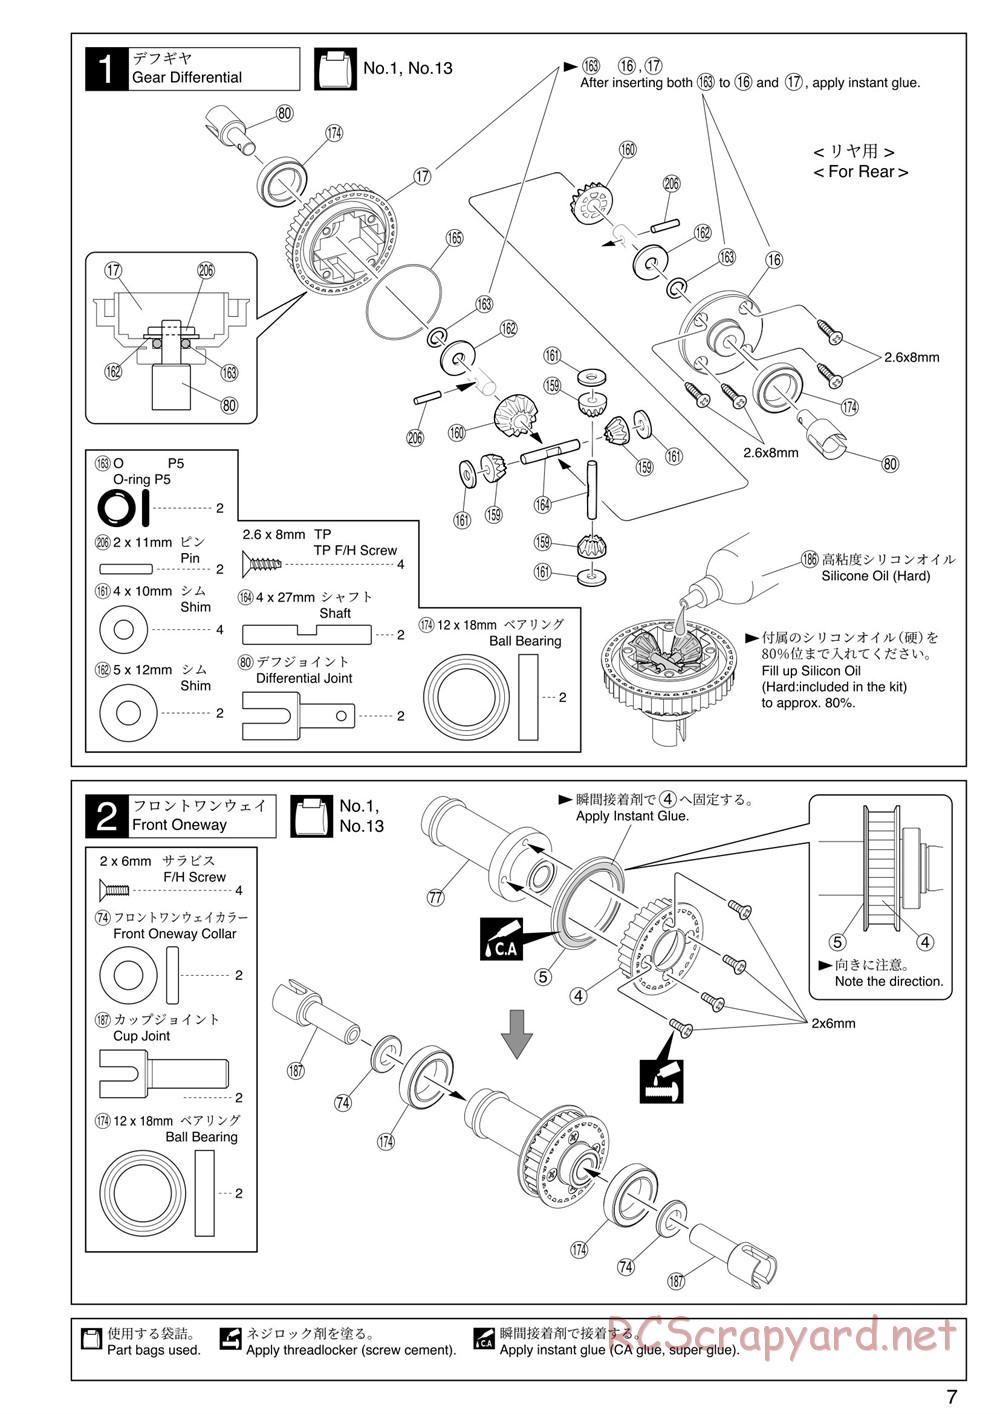 Kyosho - V-One RRR Evo - Manual - Page 7